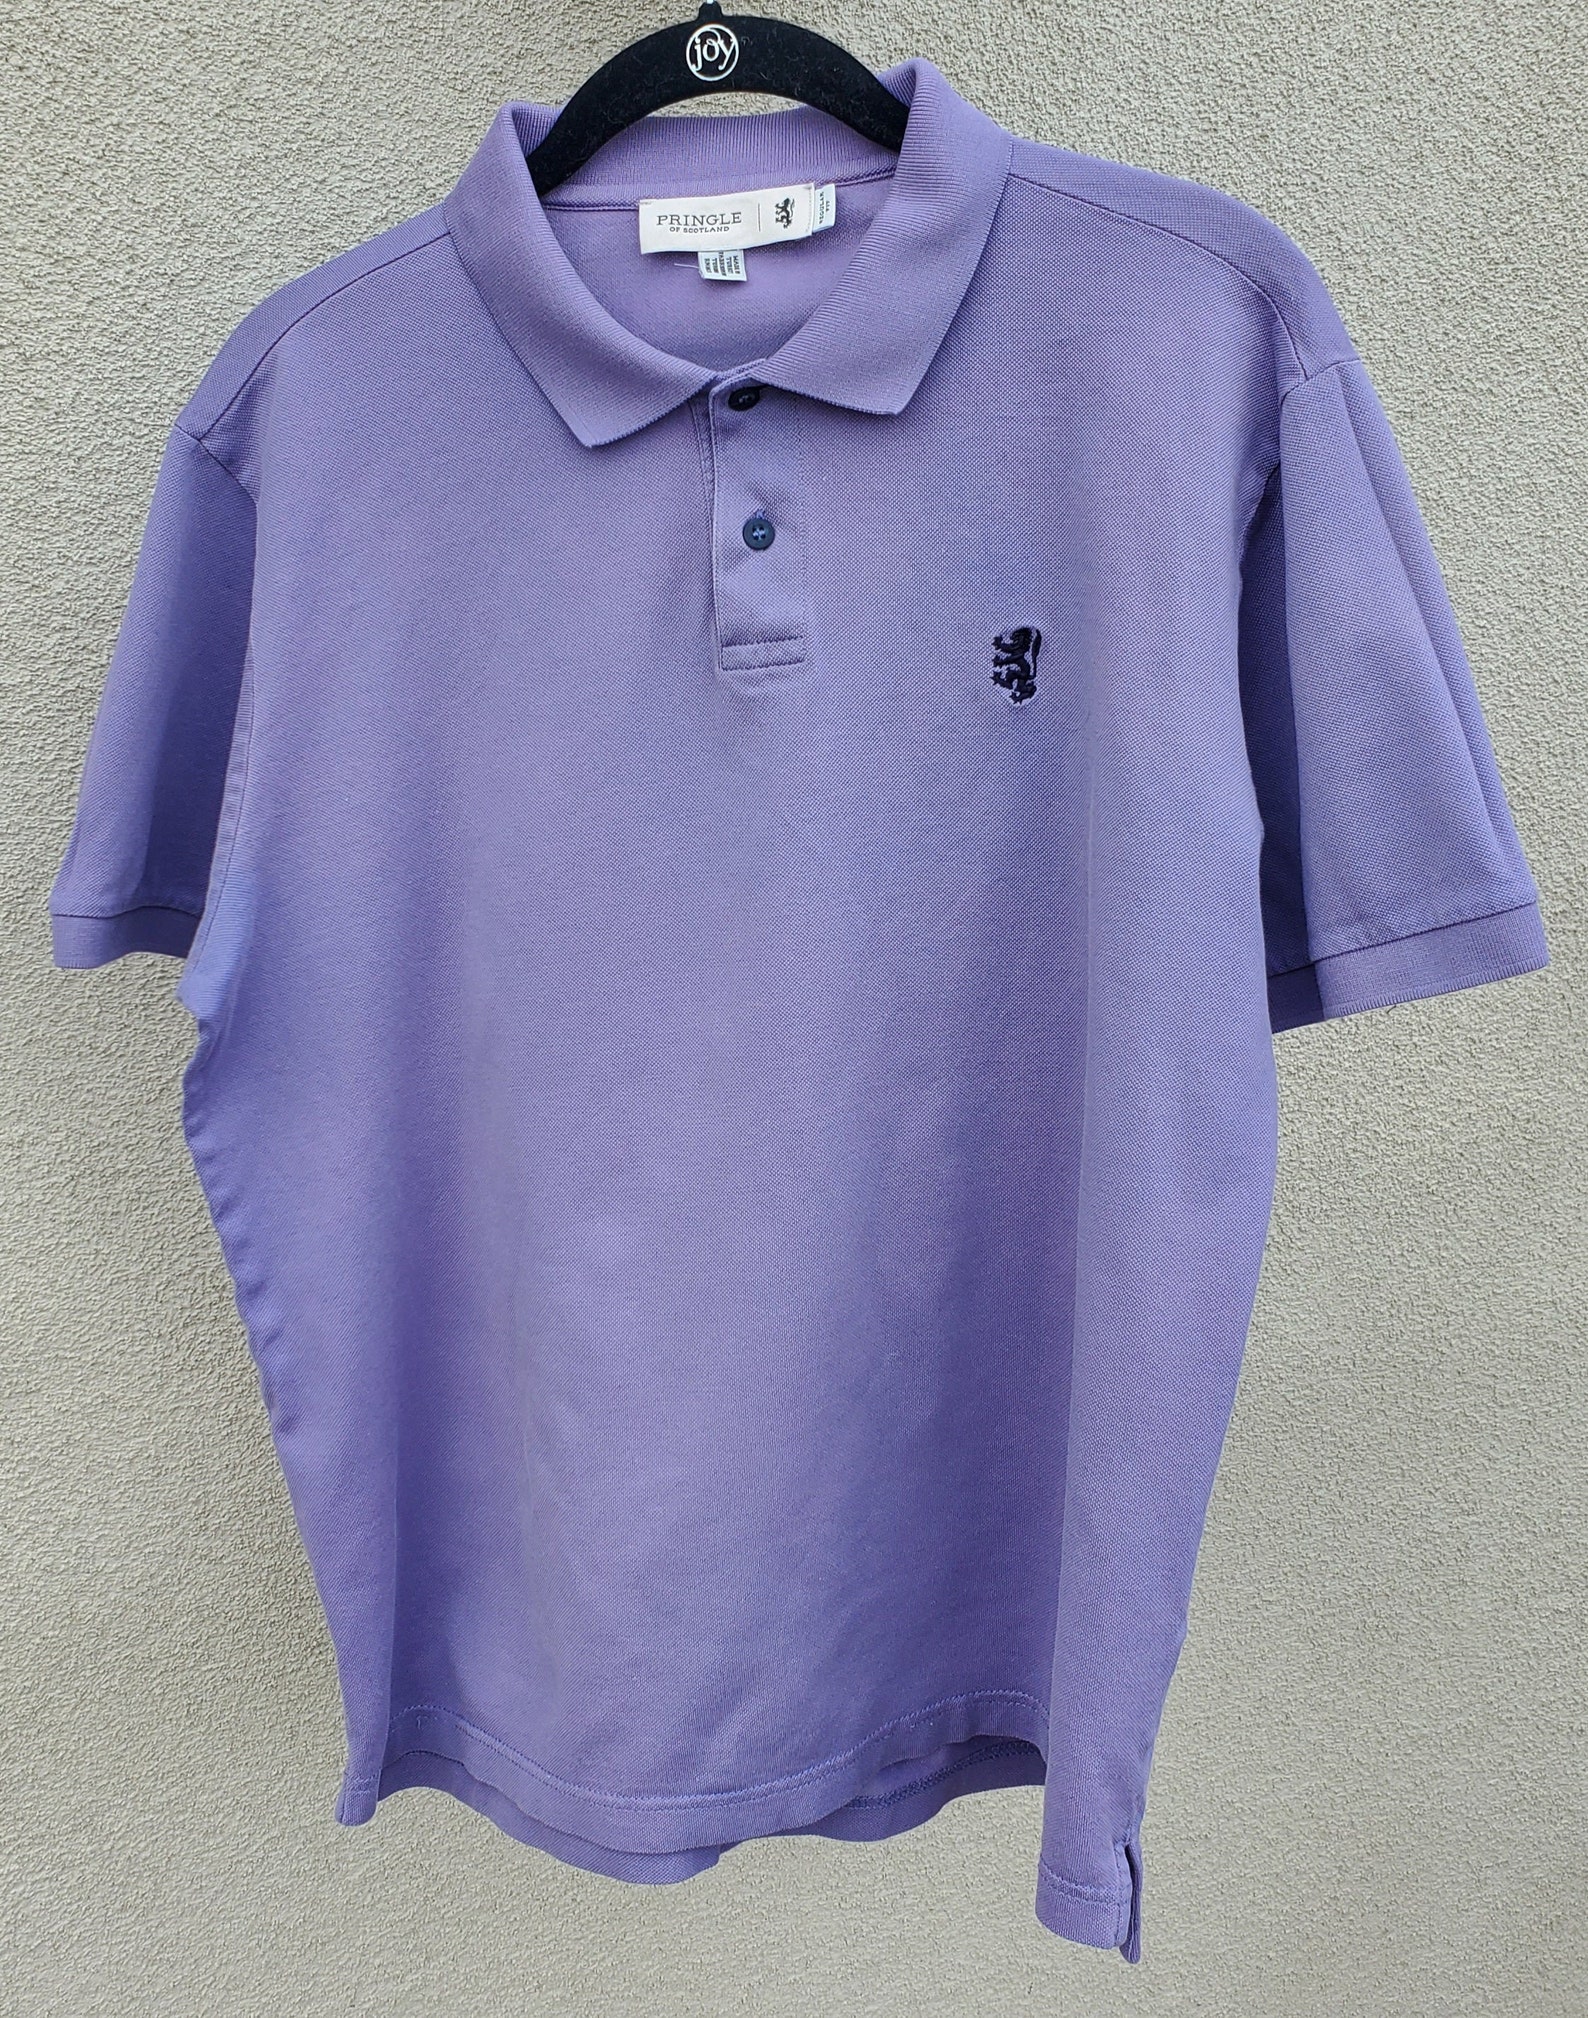 Pringle of Scotland Polo/Golf Shirt M Lilac | Etsy